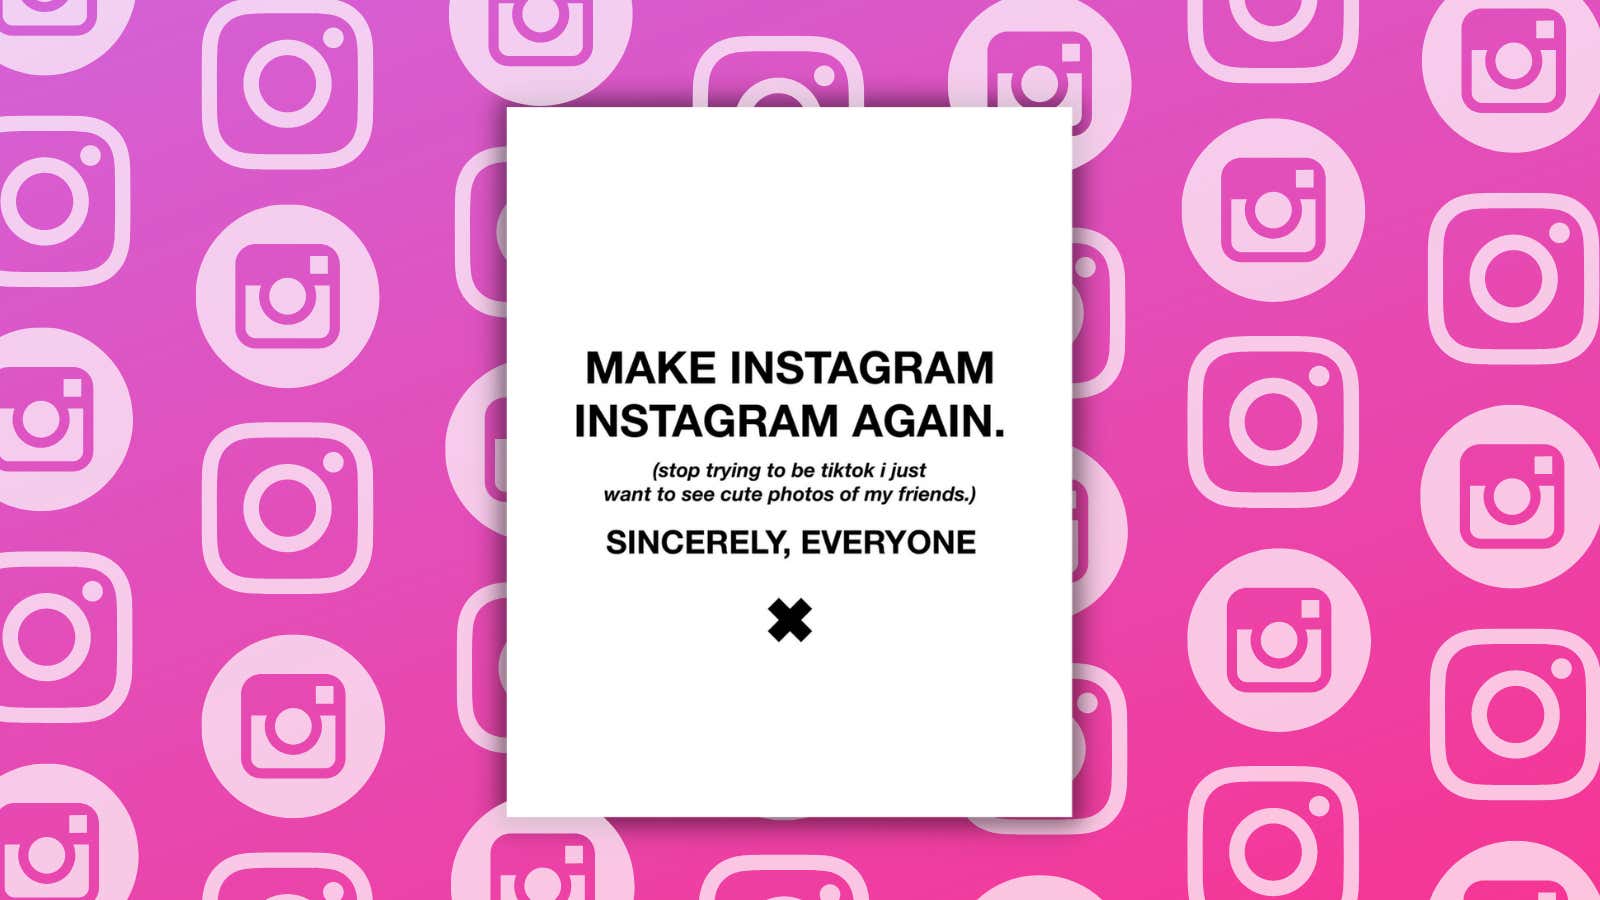 Meet the Photographer Behind the Viral 'Make Instagram Instagram Again' Meme